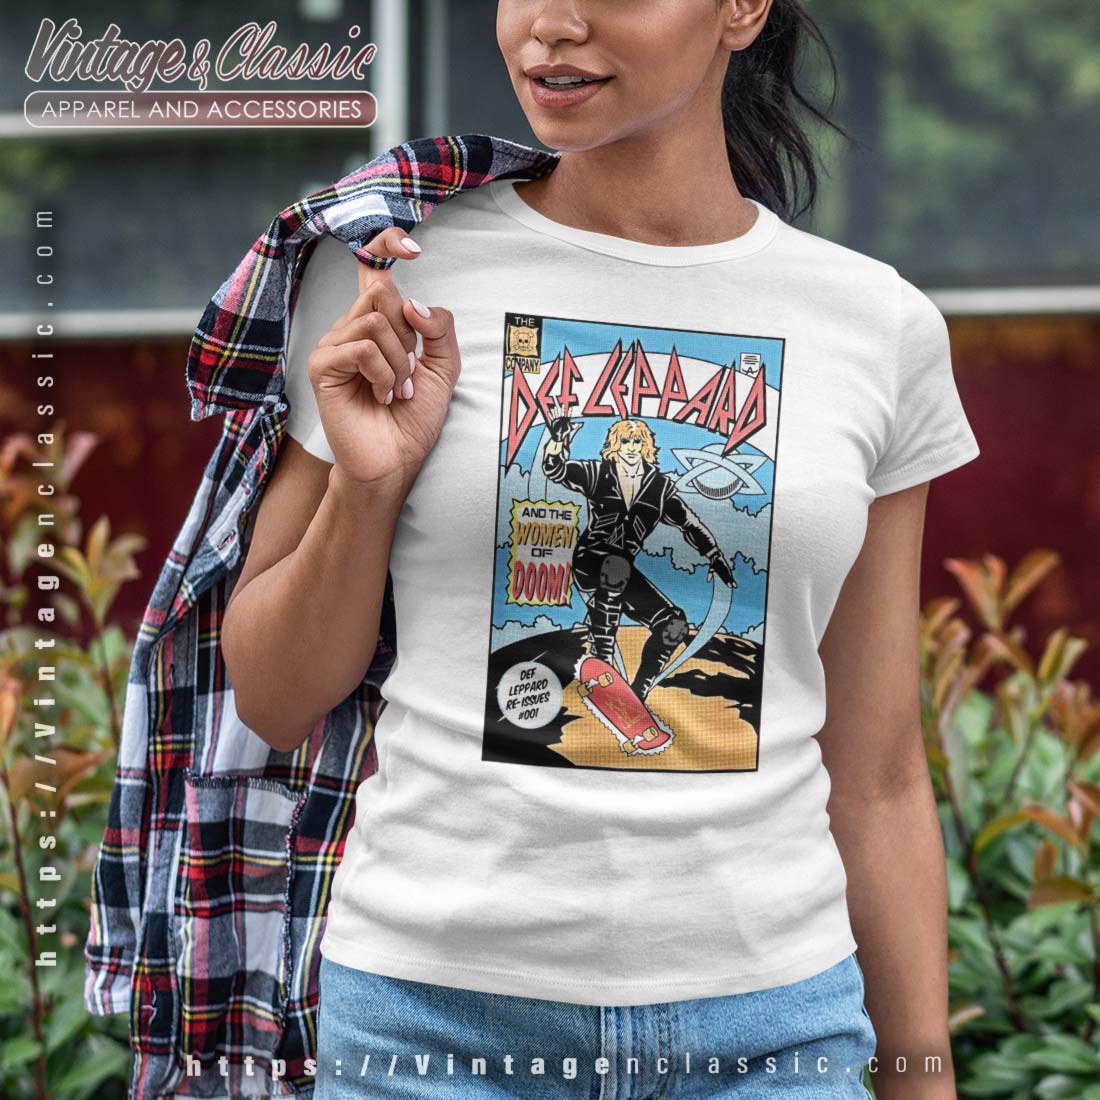 Def Leppard Comic Shirt - Printed Brand